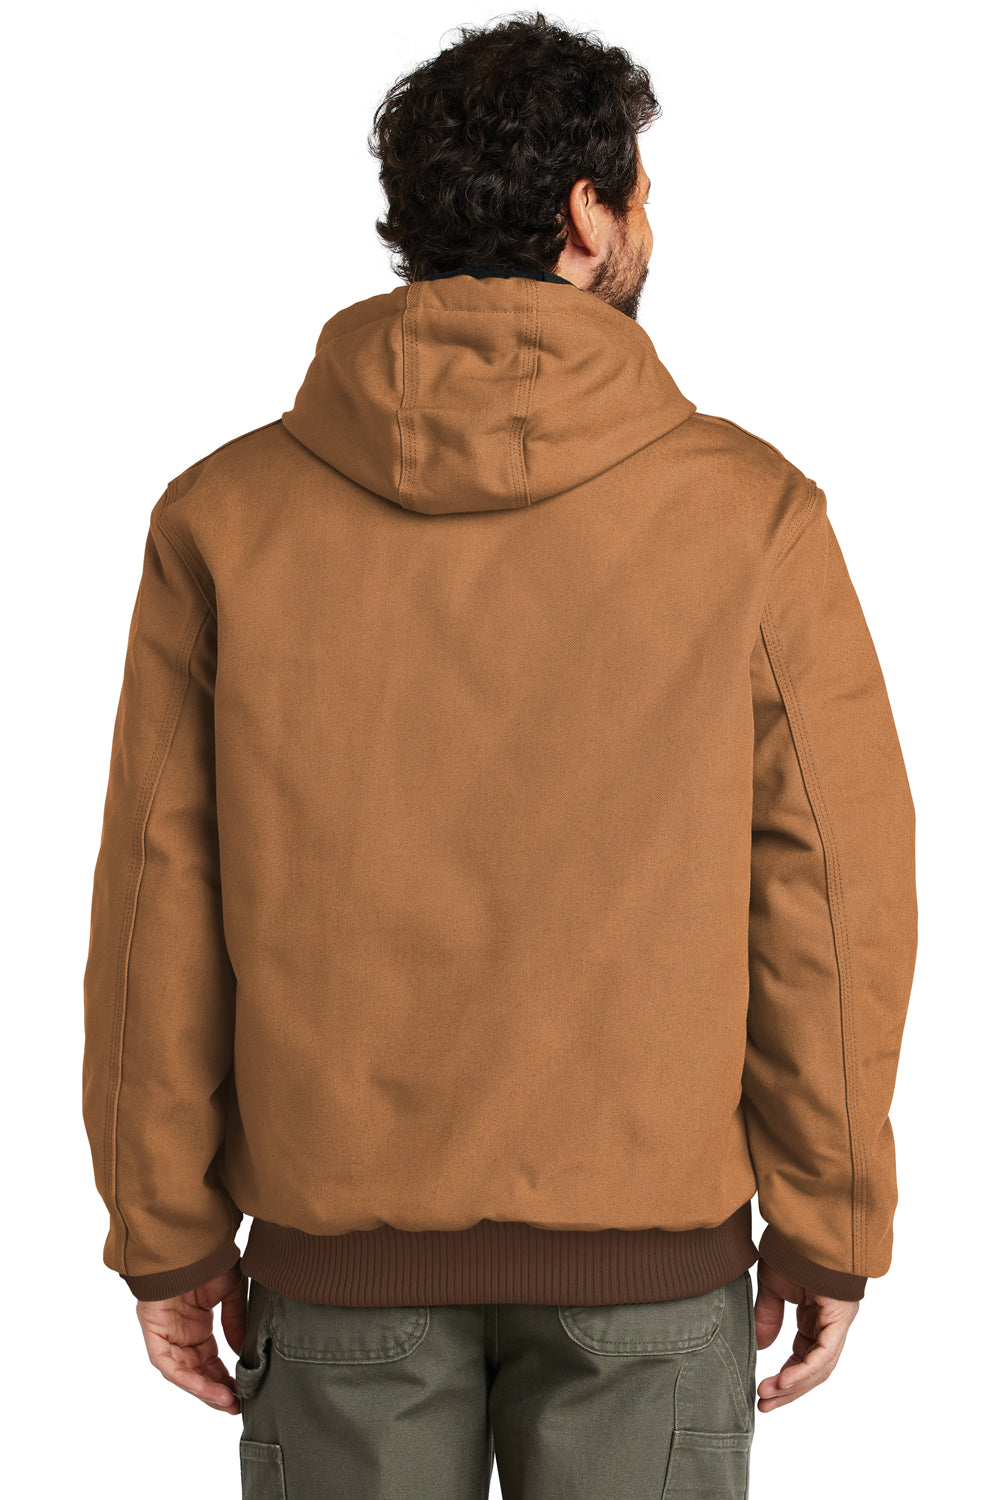 Carhartt CTSJ140/CTTSJ140 Mens Wind & Water Resistant Duck Cloth Full Zip Hooded Work Jacket Carhartt Brown Model Back